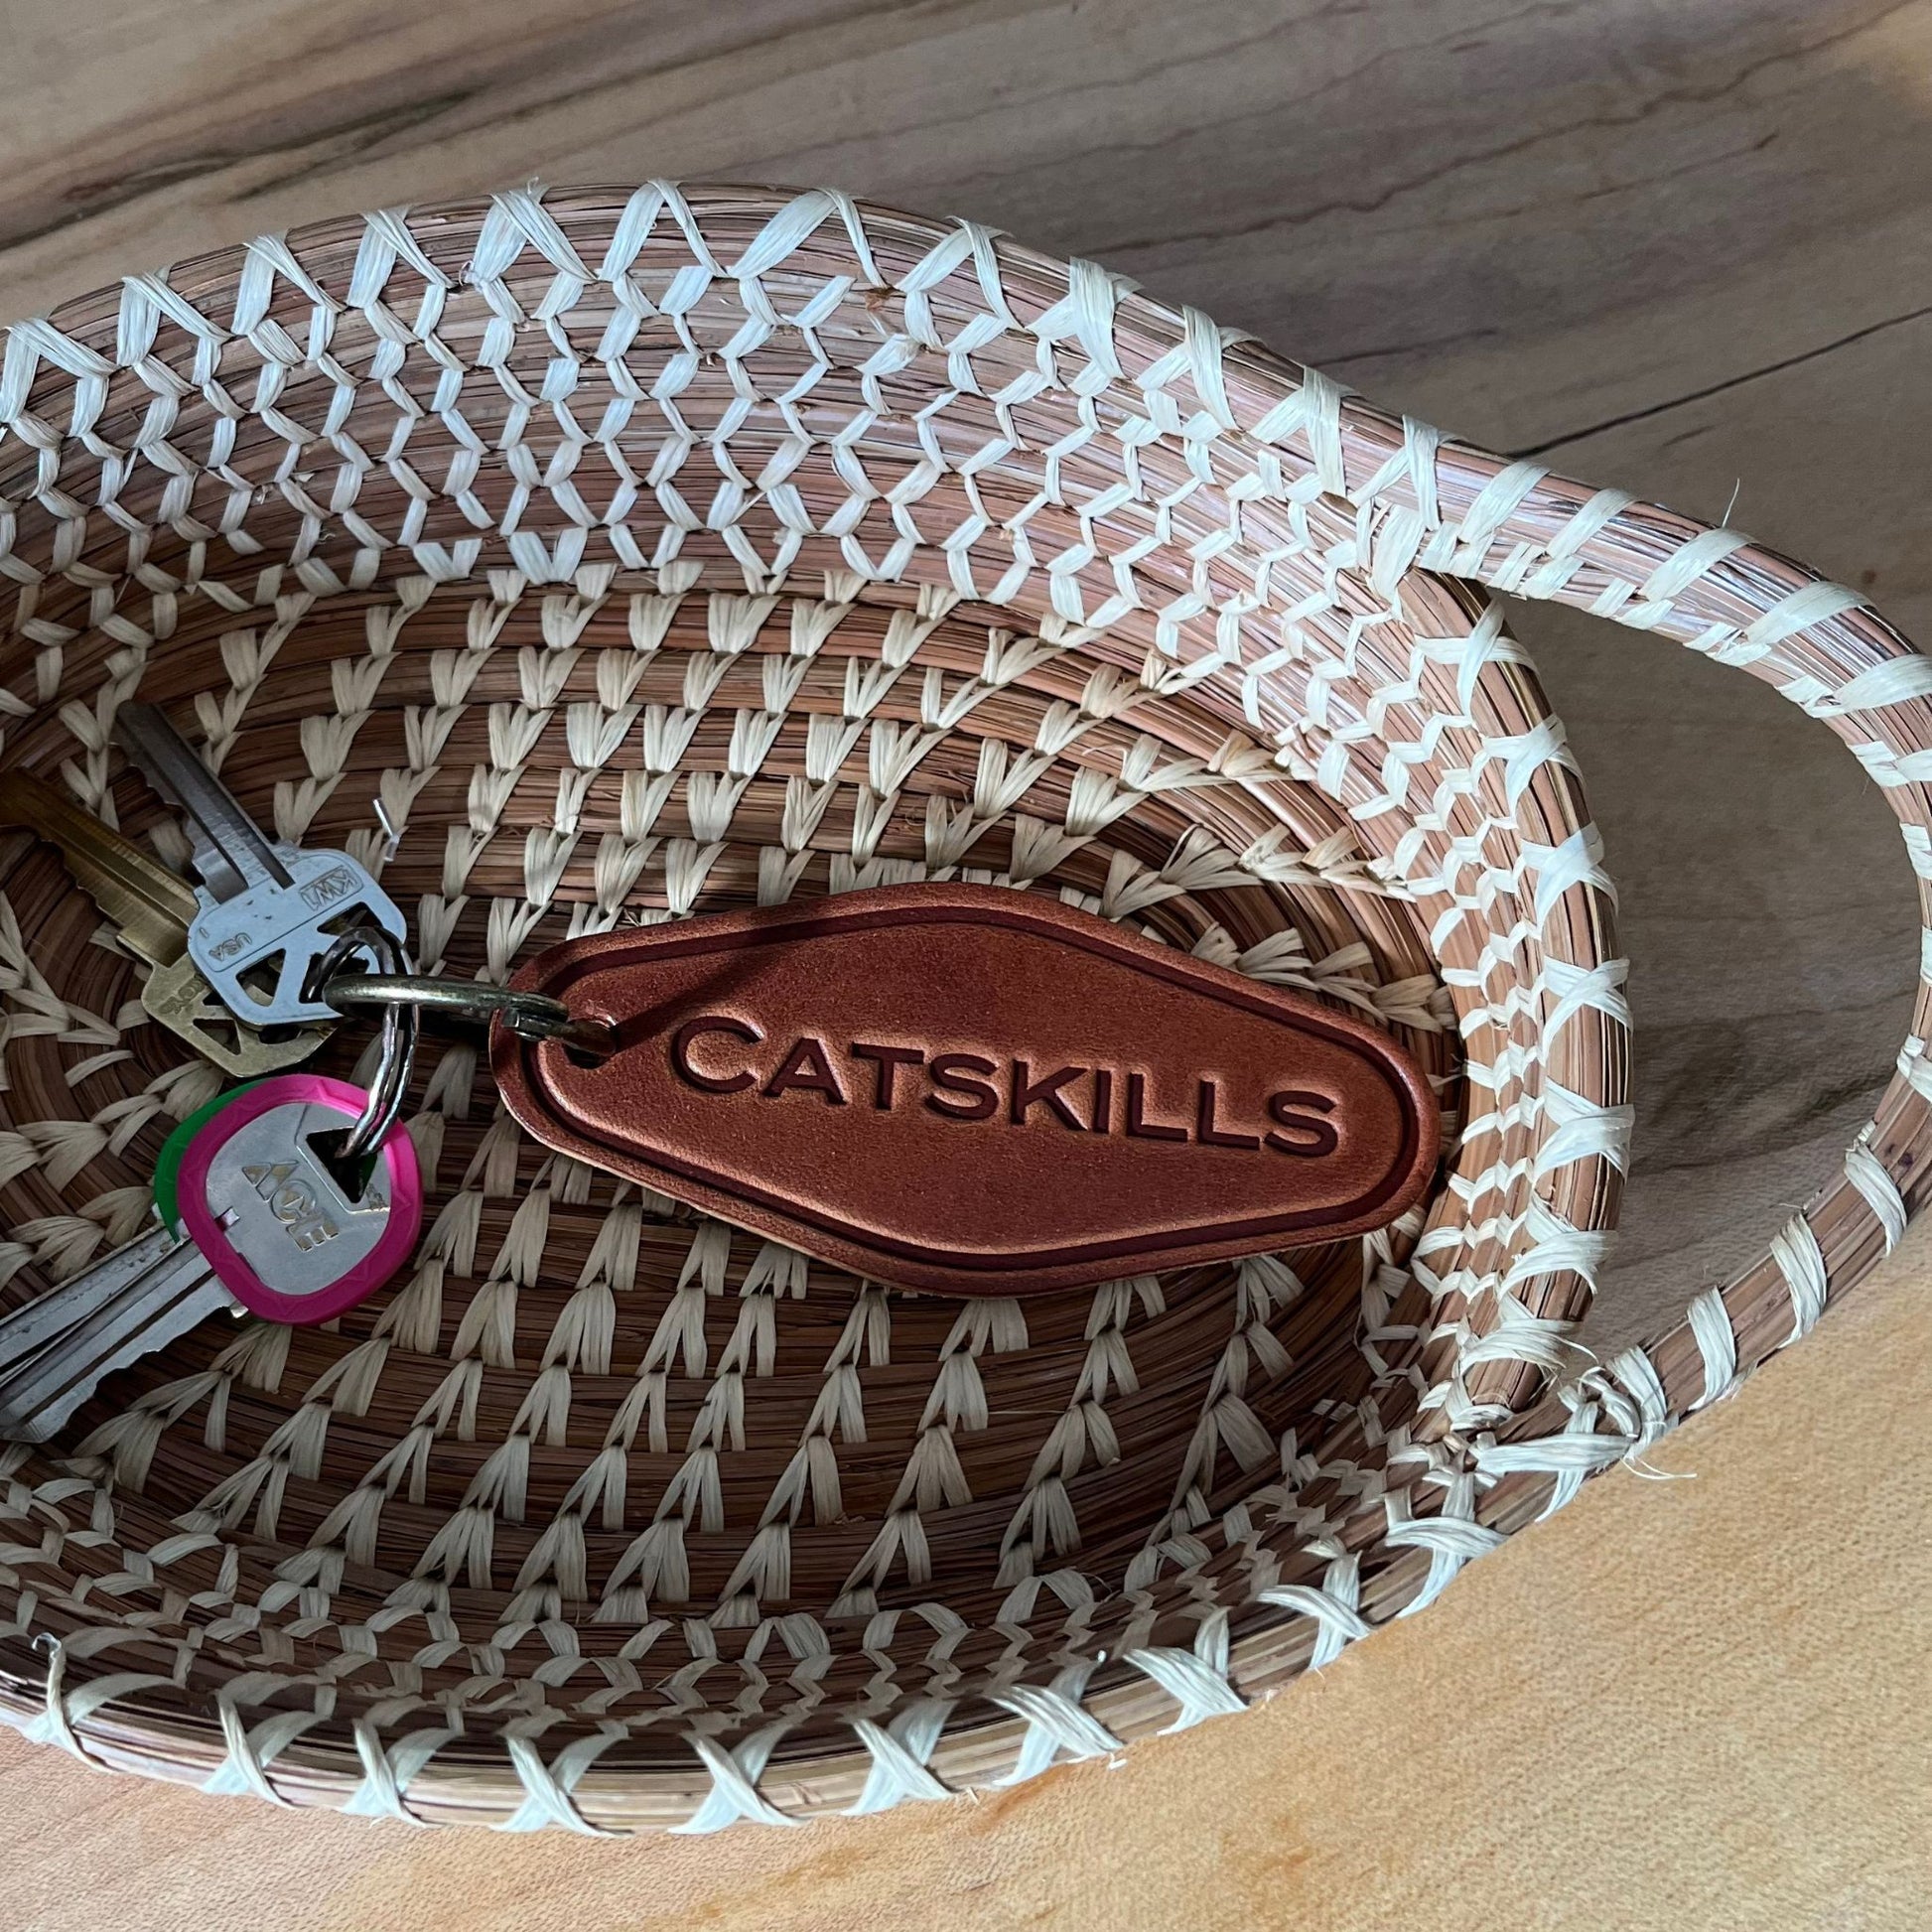 Catskills Leather Keychain in a Pine basket 